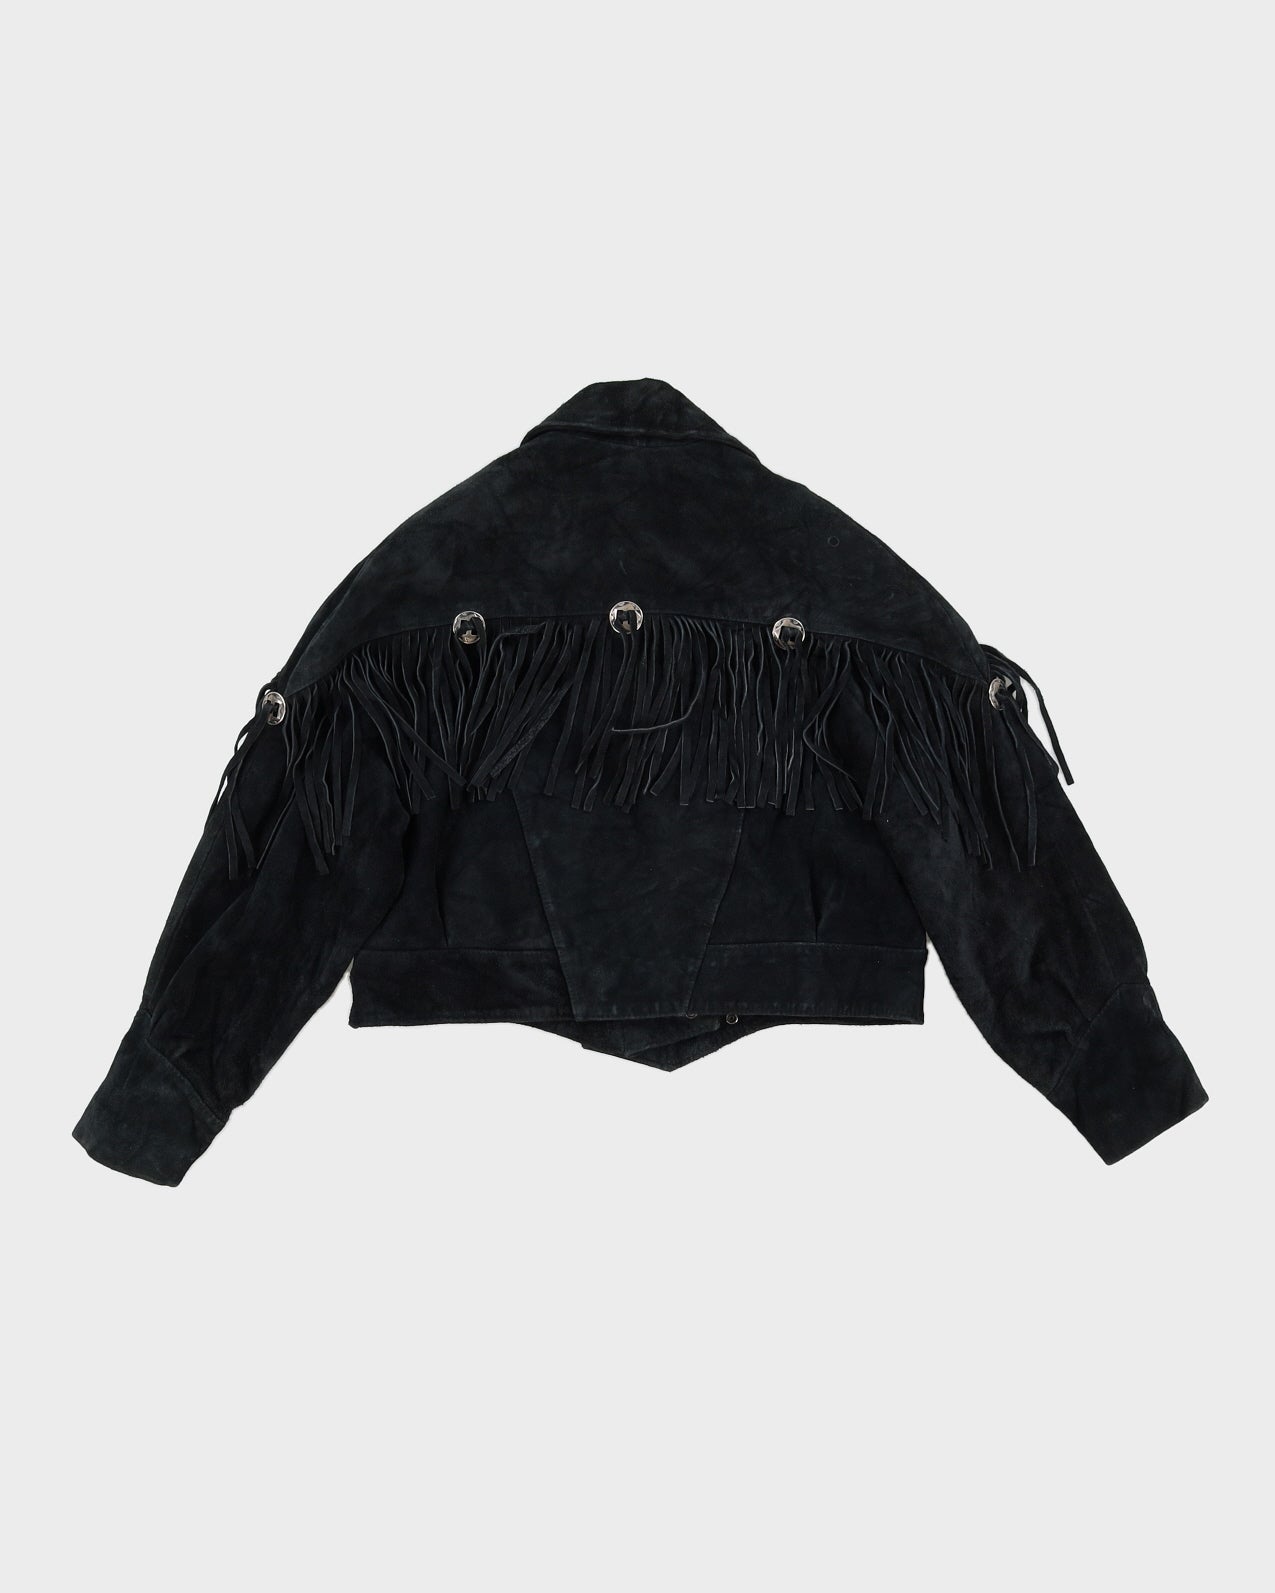 Vintage 80s Black Cropped Suede Tassel Jacket - M